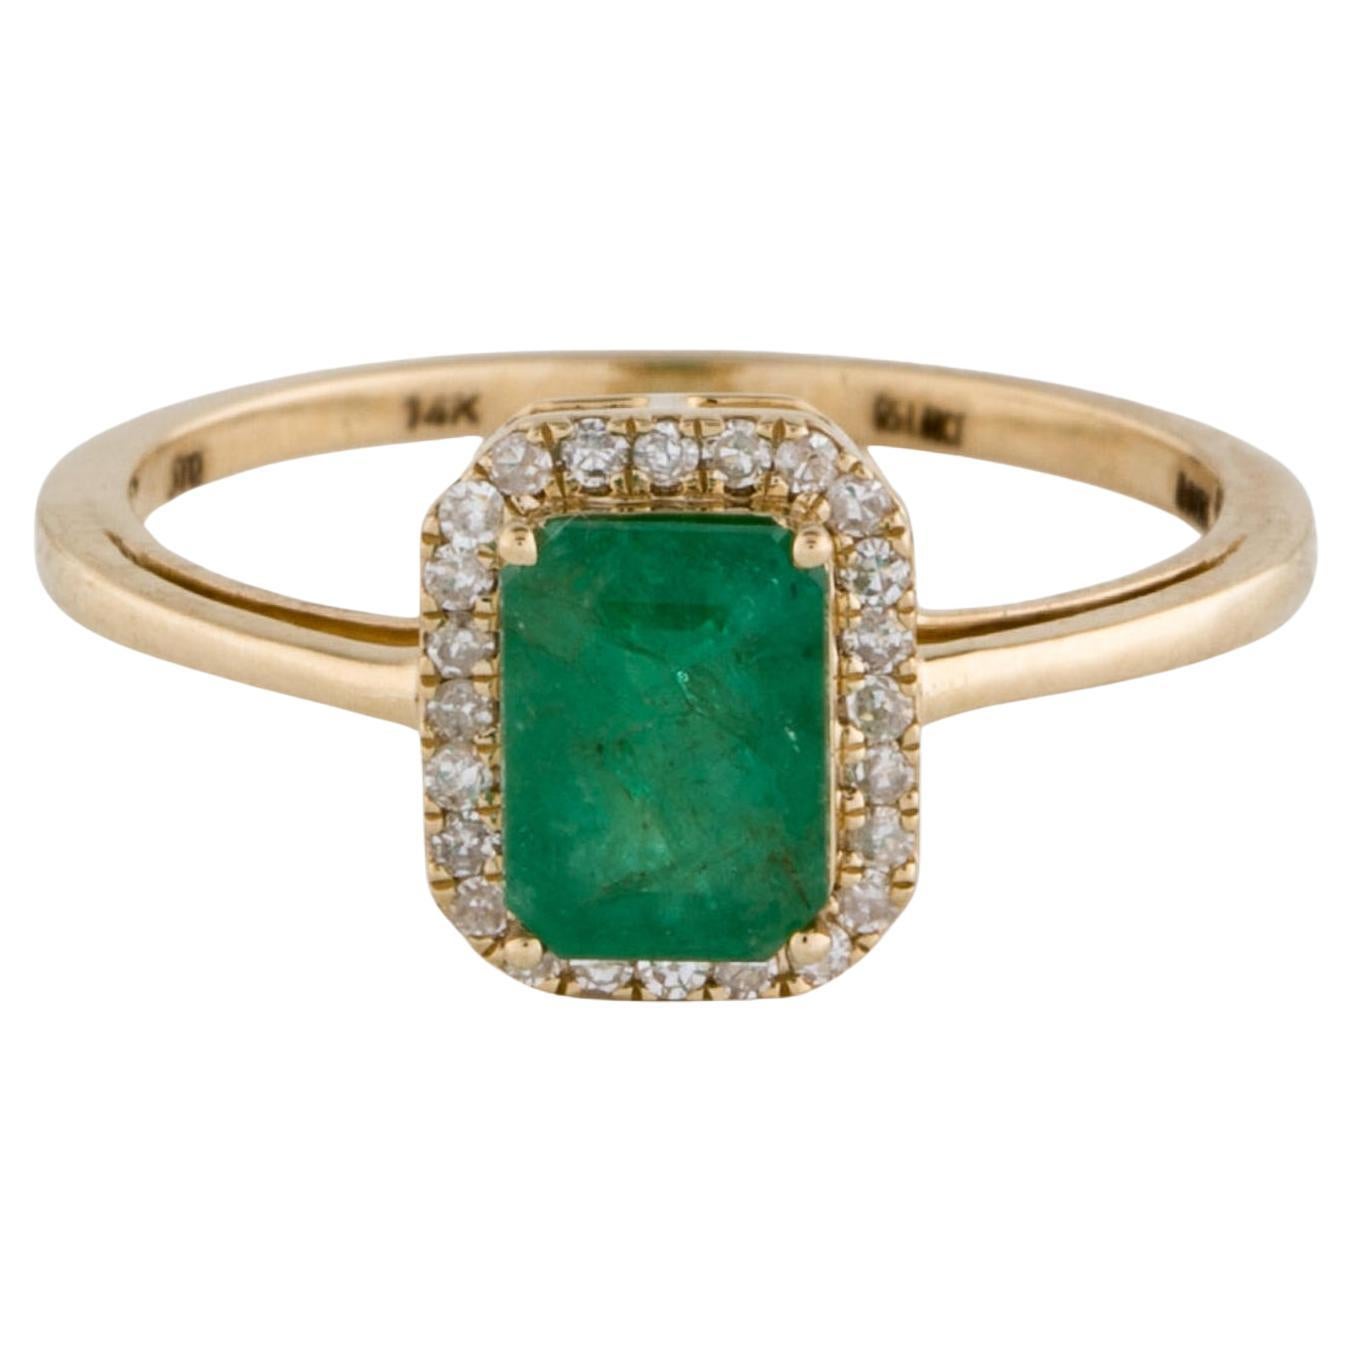 Exquisite 14K 1.00ct Emerald & Diamond Ring - Size 7 - Elegant Statement Jewelry For Sale